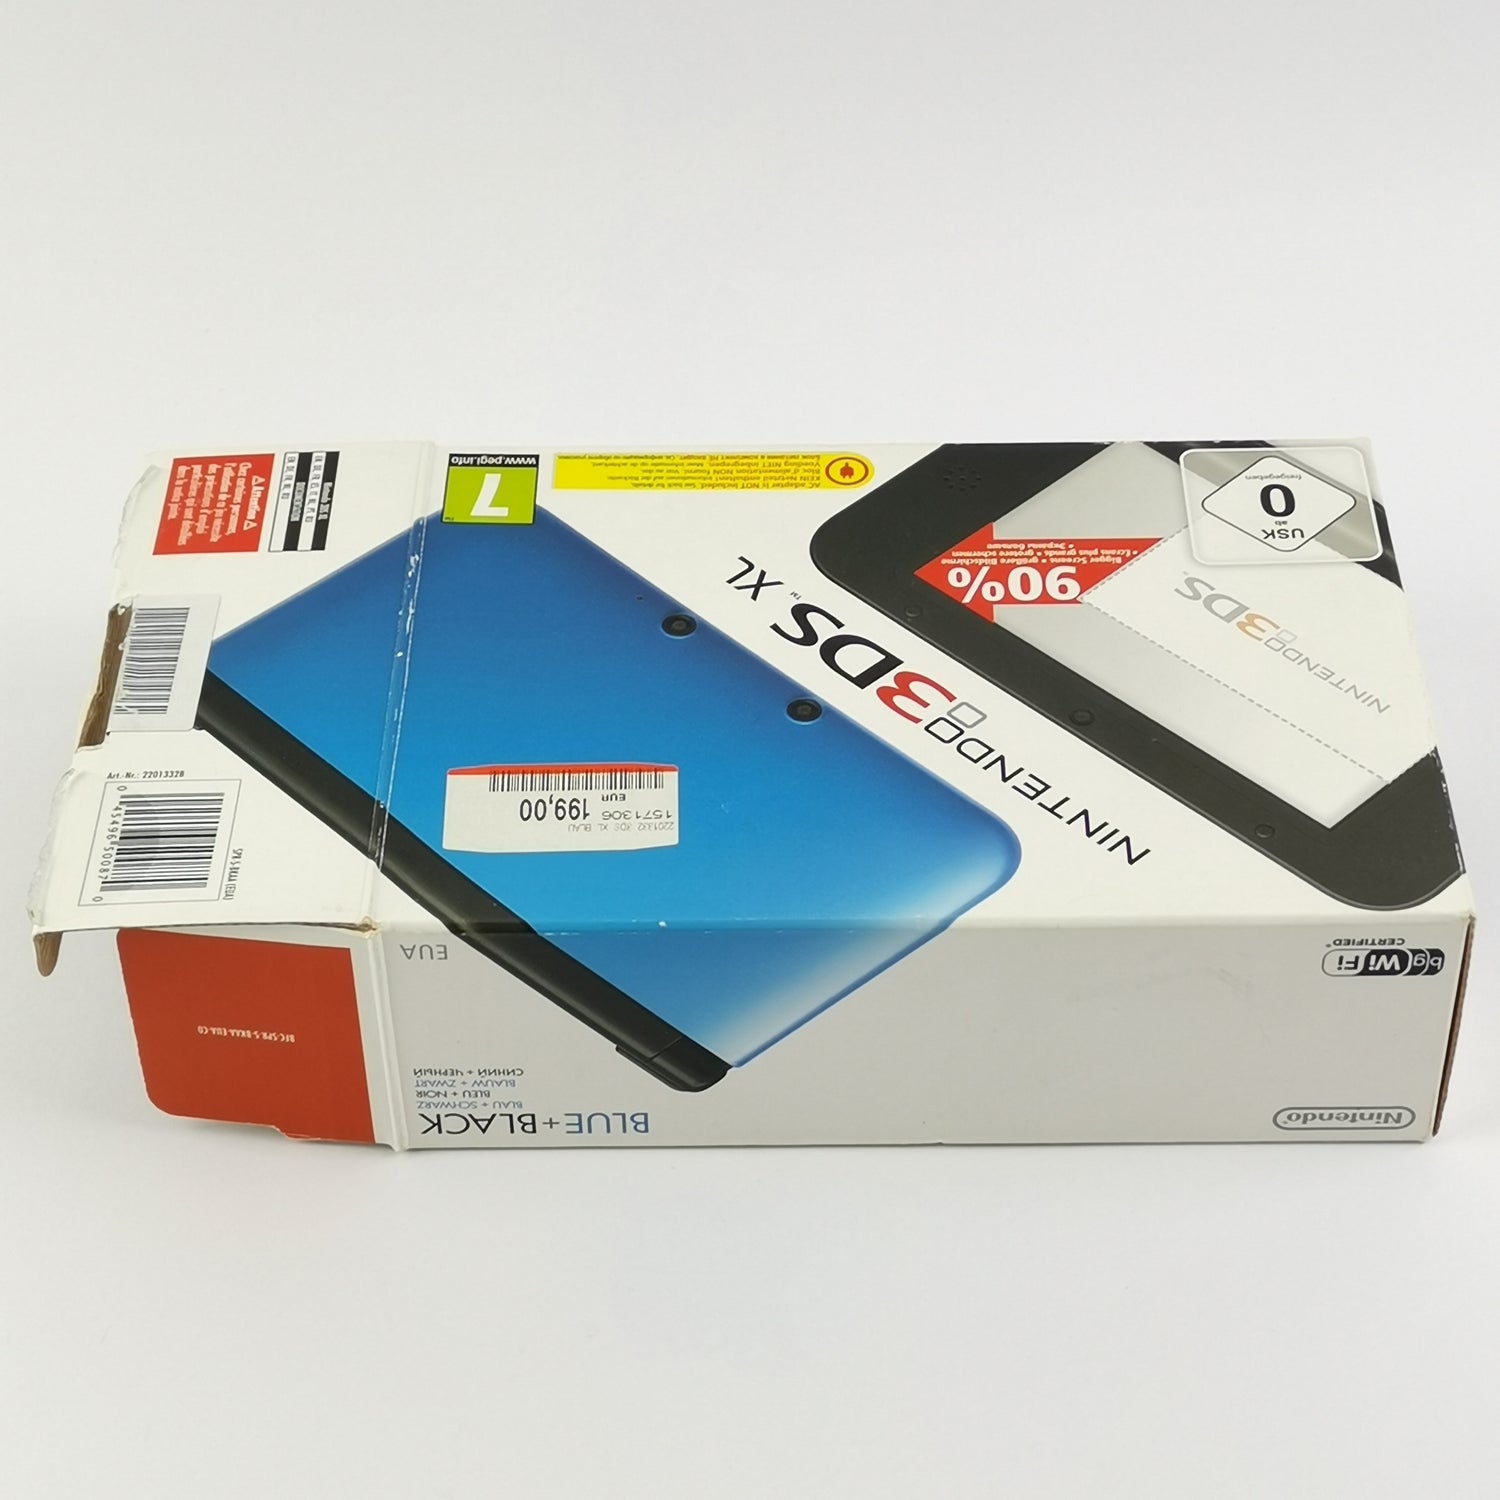 Nintendo 3DS XL Konsole : 3 DS Console in BLAU schwarz BLUE + BLACK - OVP PAL